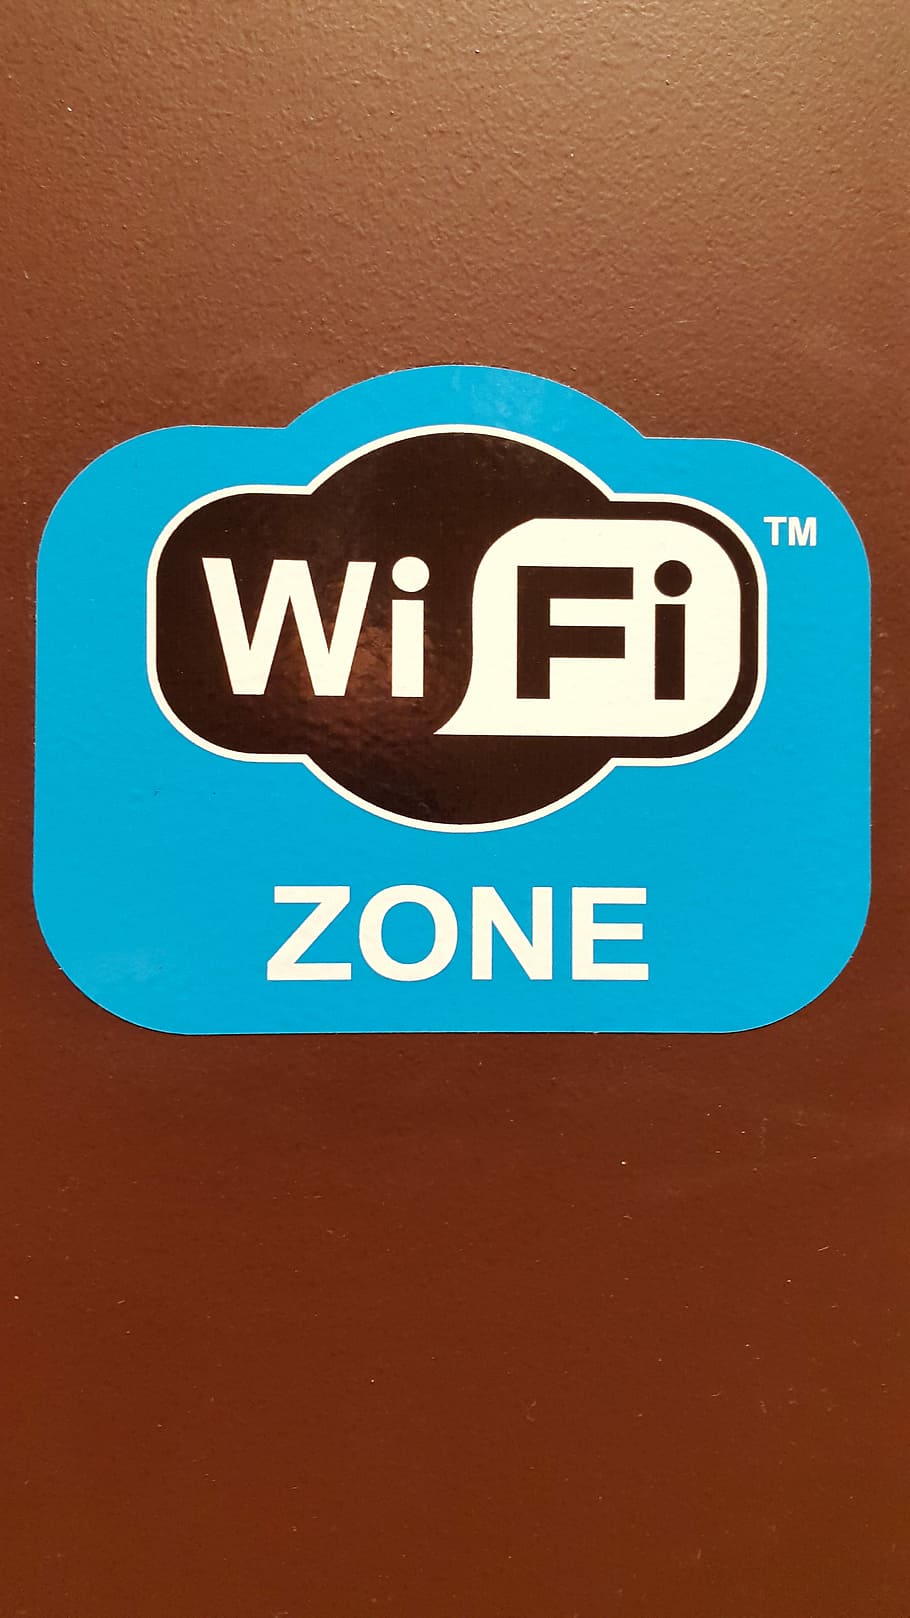 WIfi Zone logo graphic, Wifi, Zone, Shield, Note, Surf, street sign